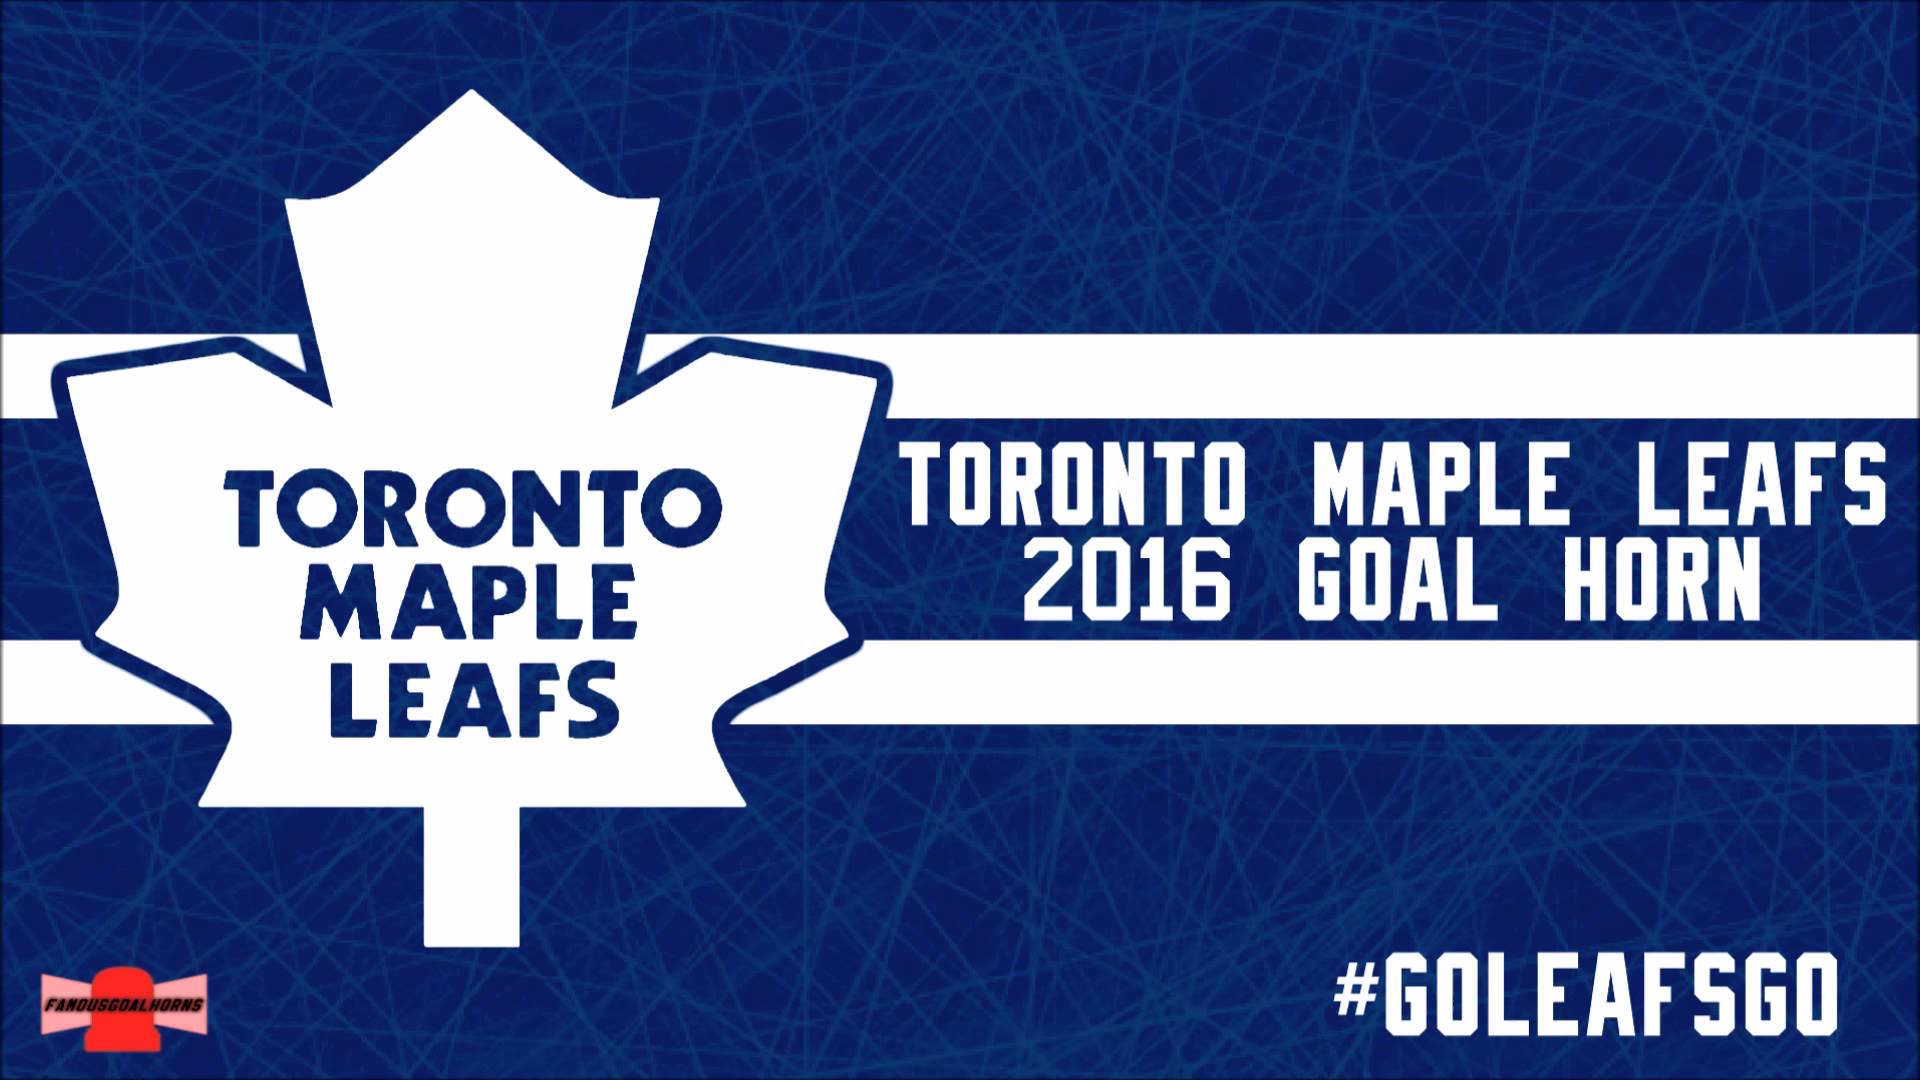 Toronto Maple Leafs 2016 Goal Horn